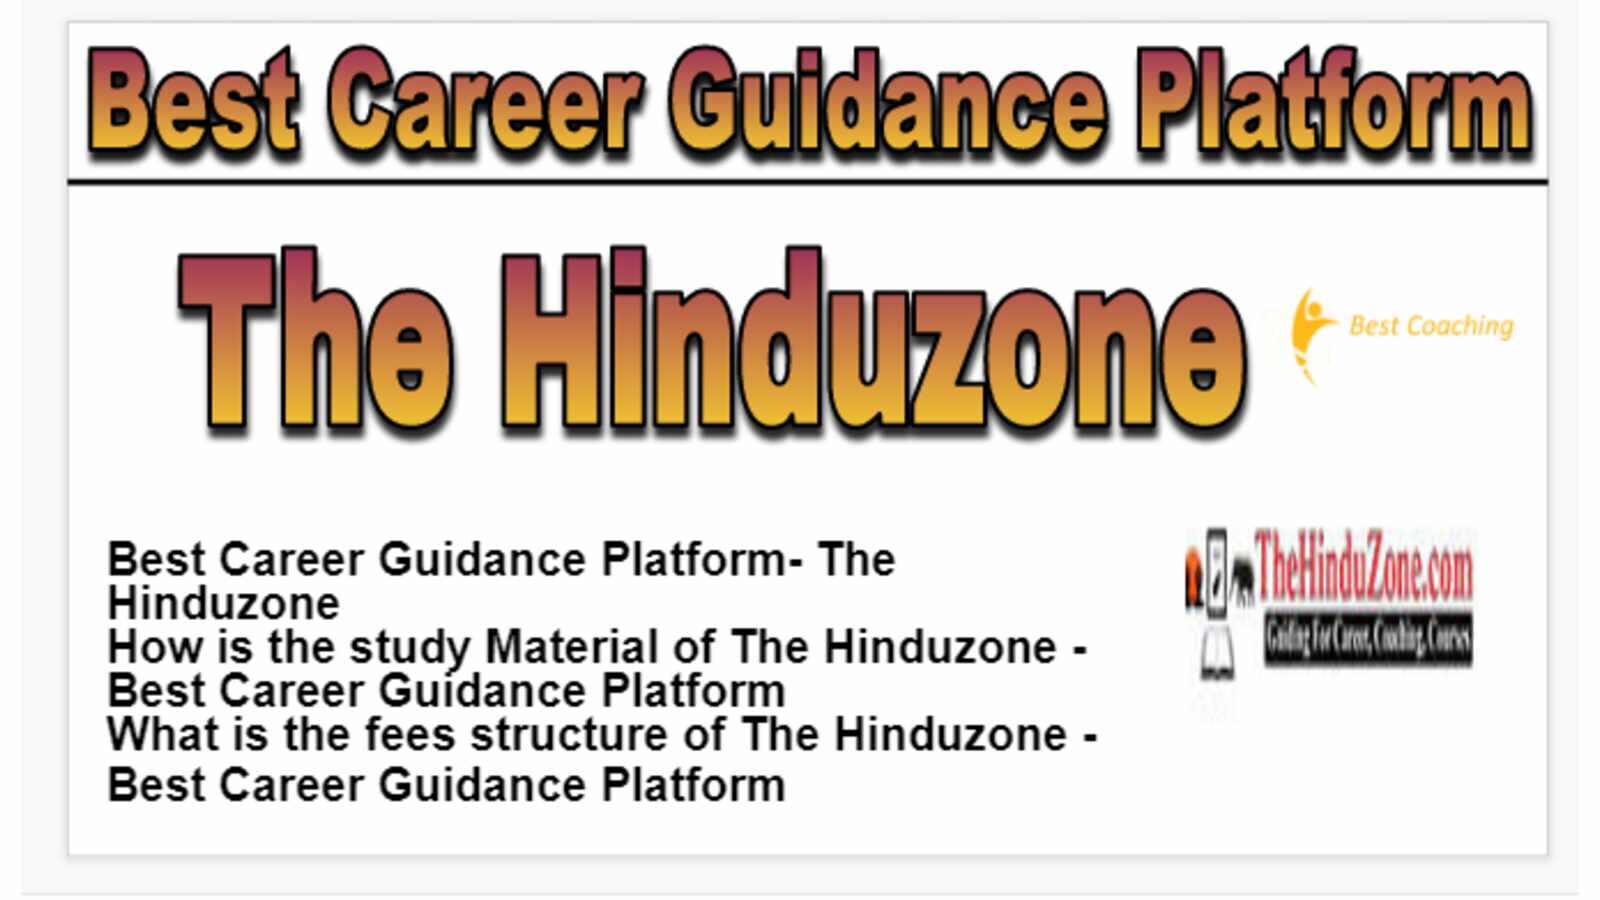 The Hinduzone Best Career Guidance Platfform